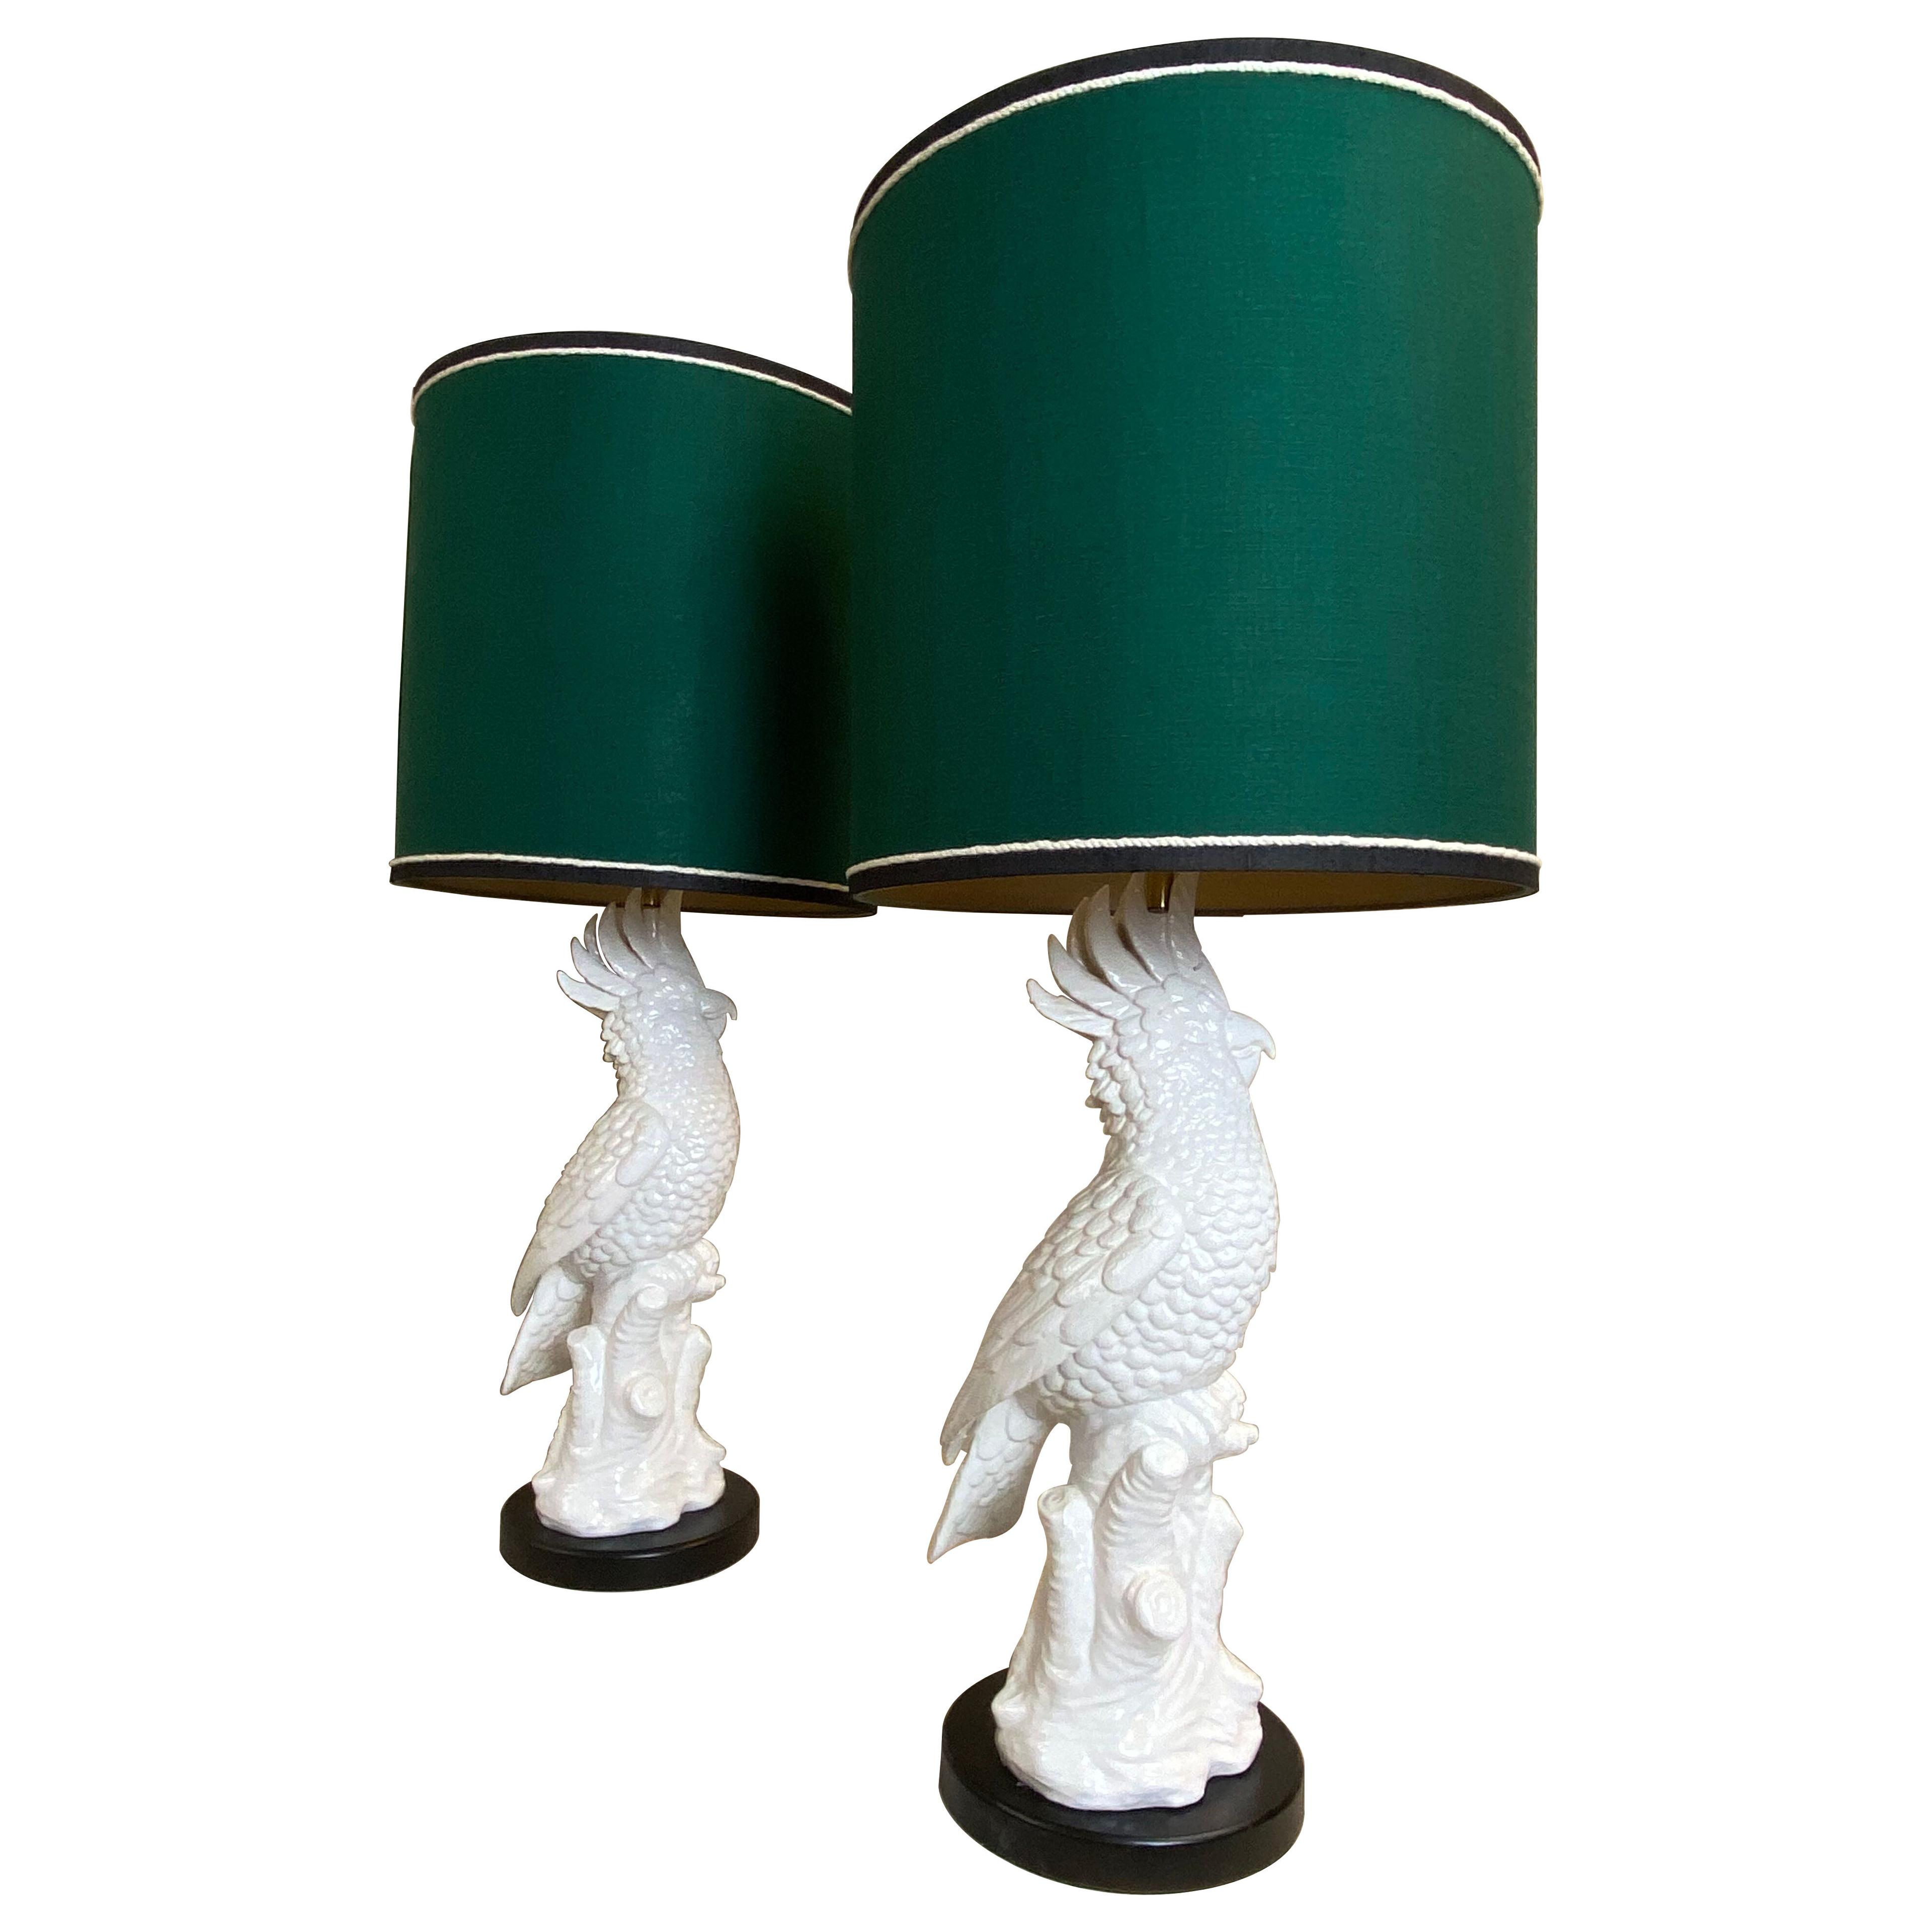 Pair of Porcelain Lamps